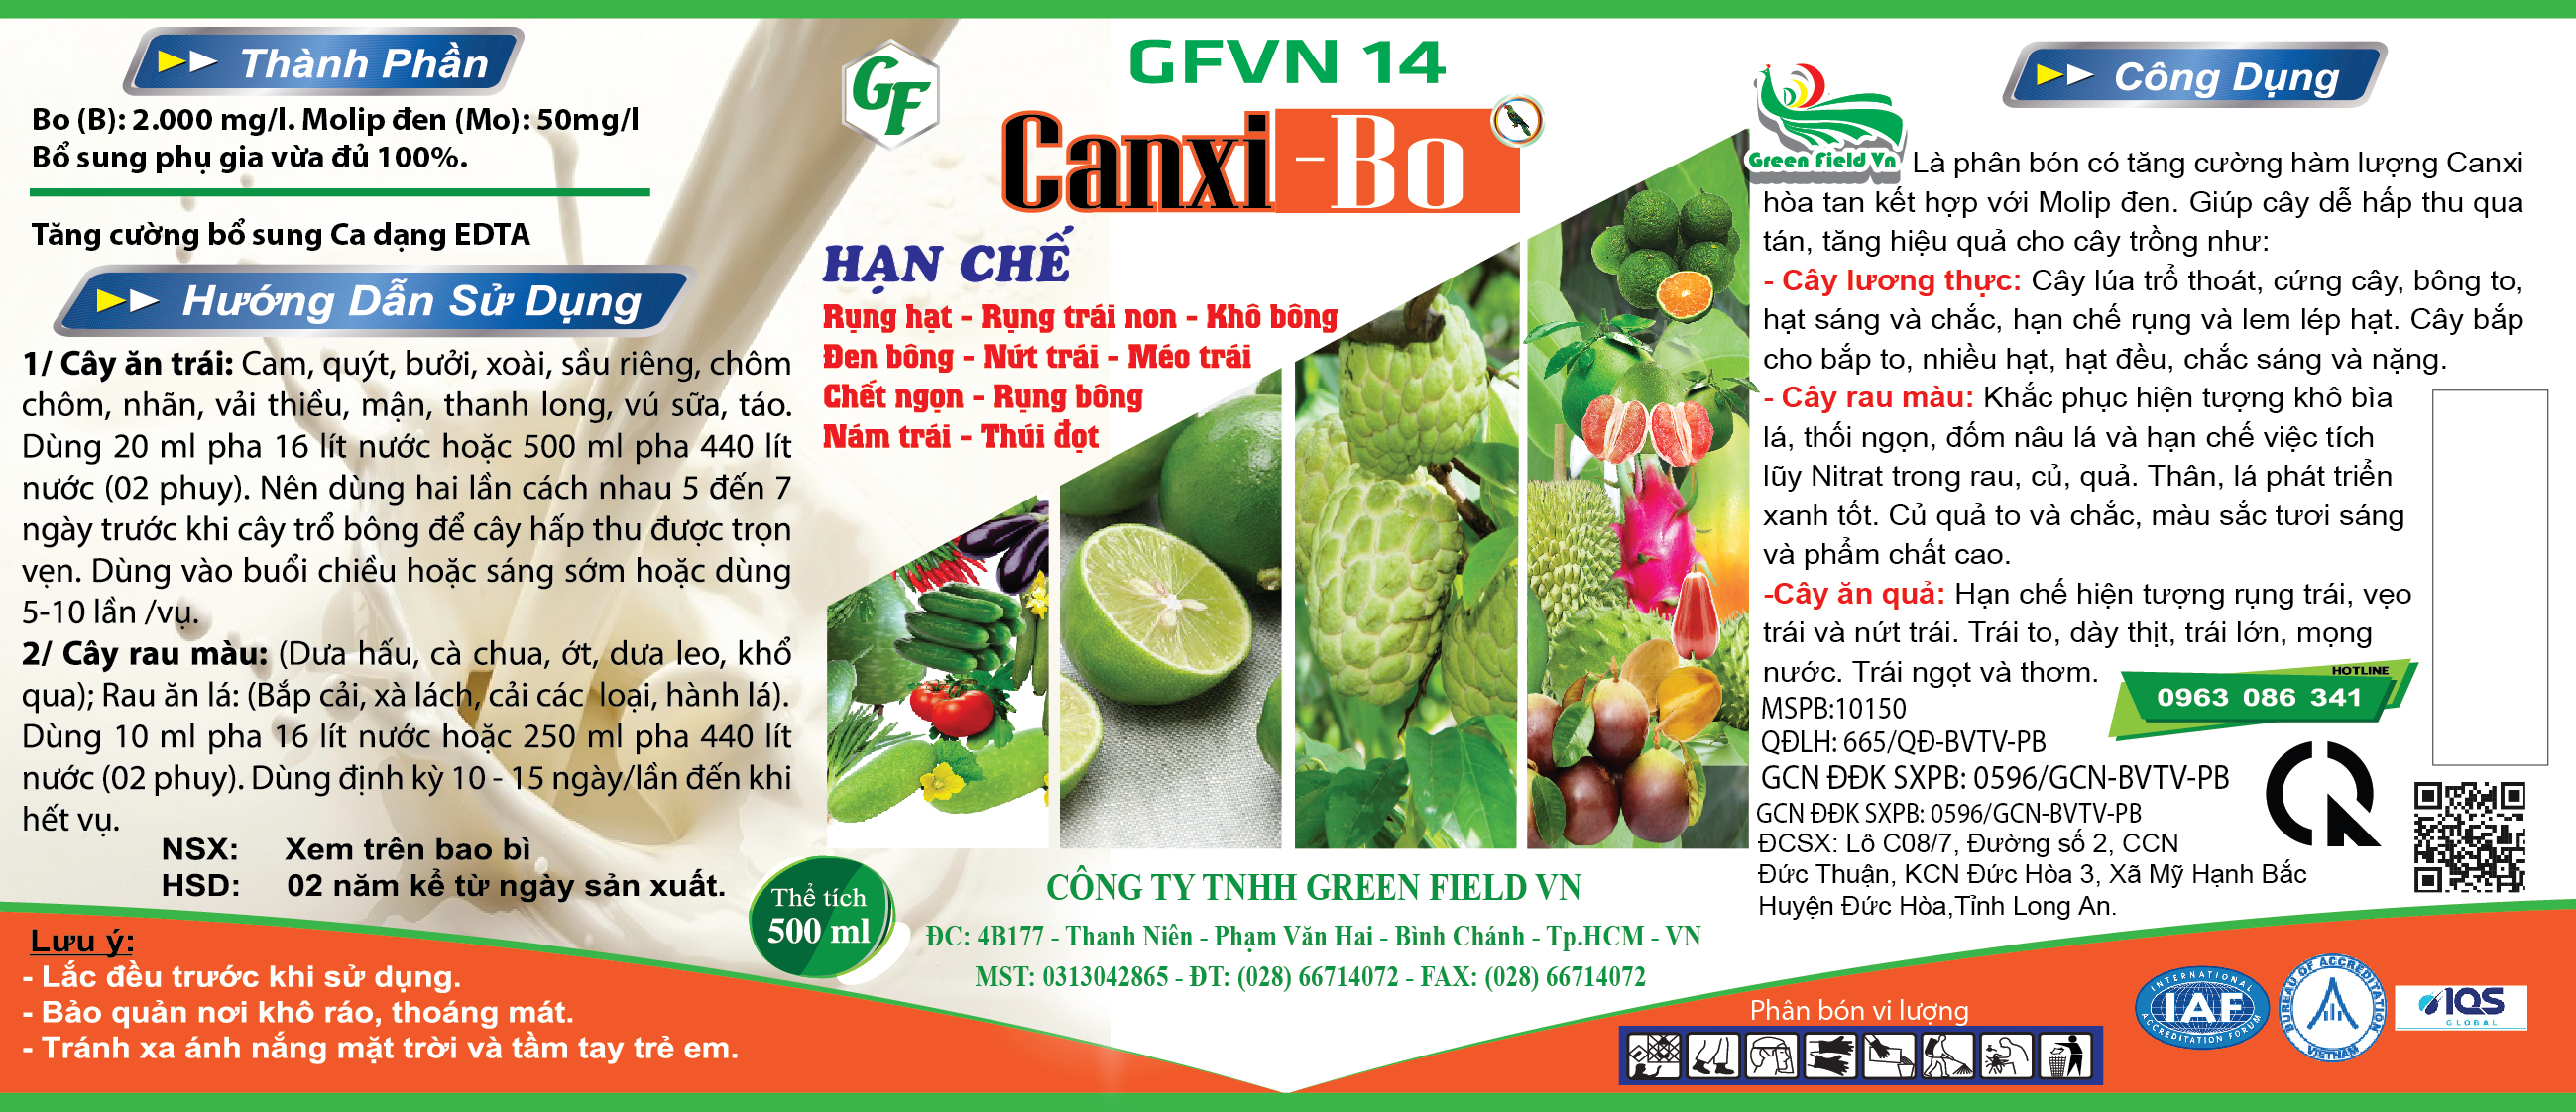 CANXI BO - GFVN 14